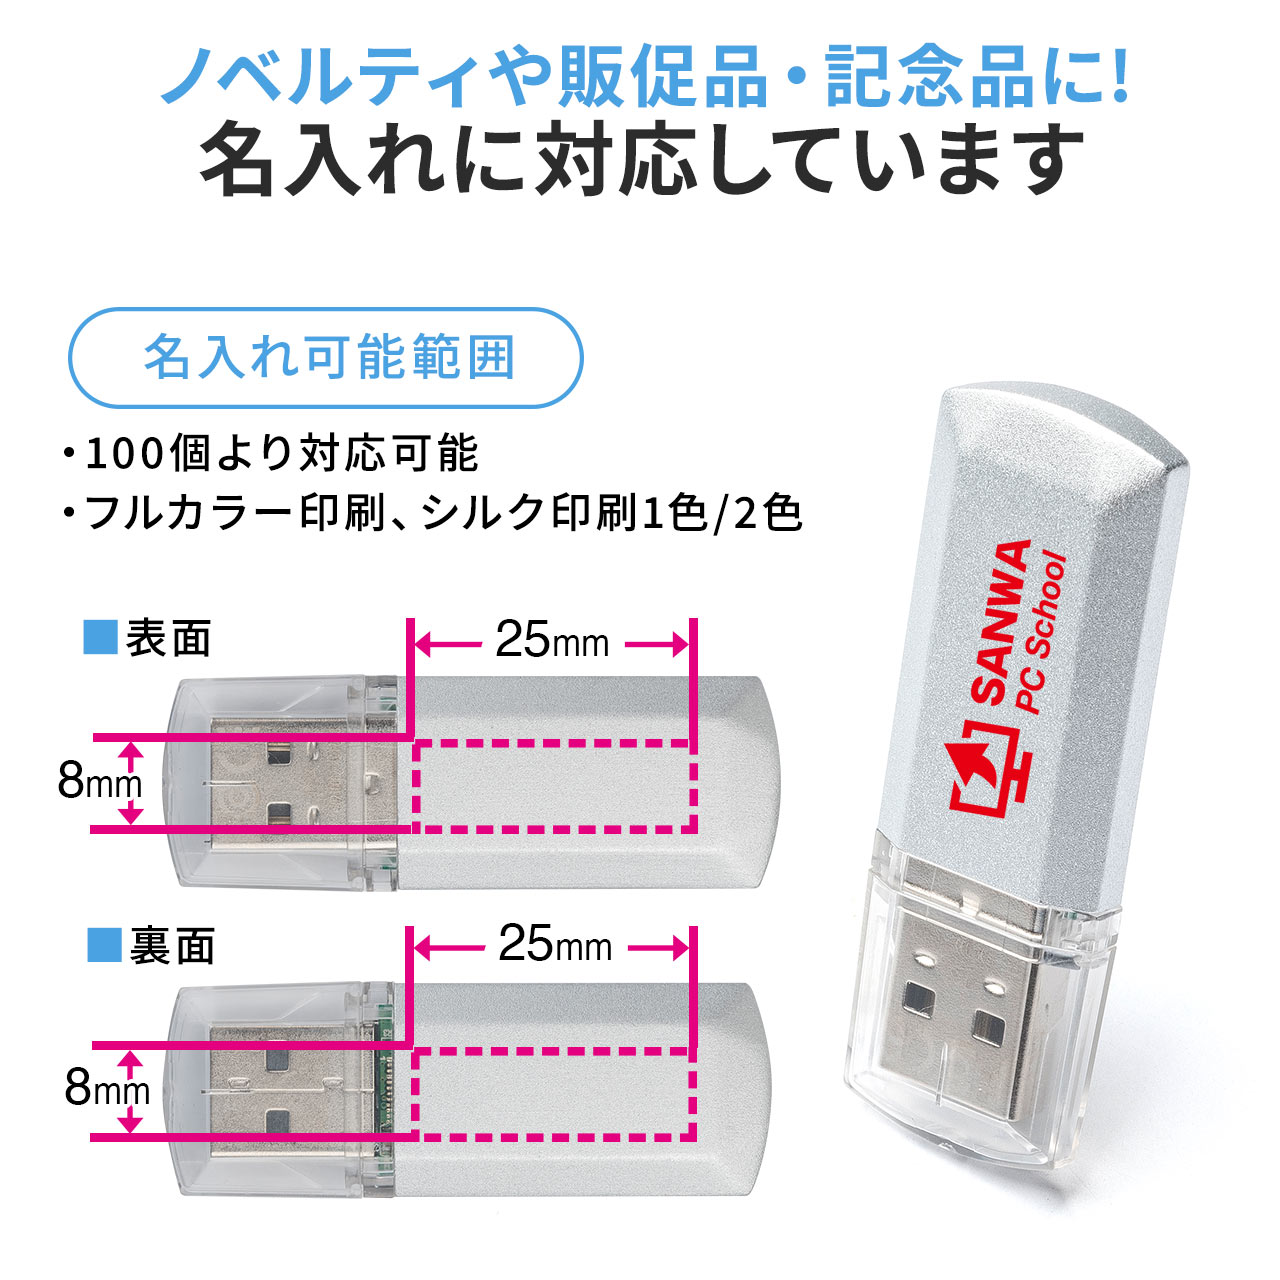 USBi4GBELbvEOΉj 600-UFD4GN2